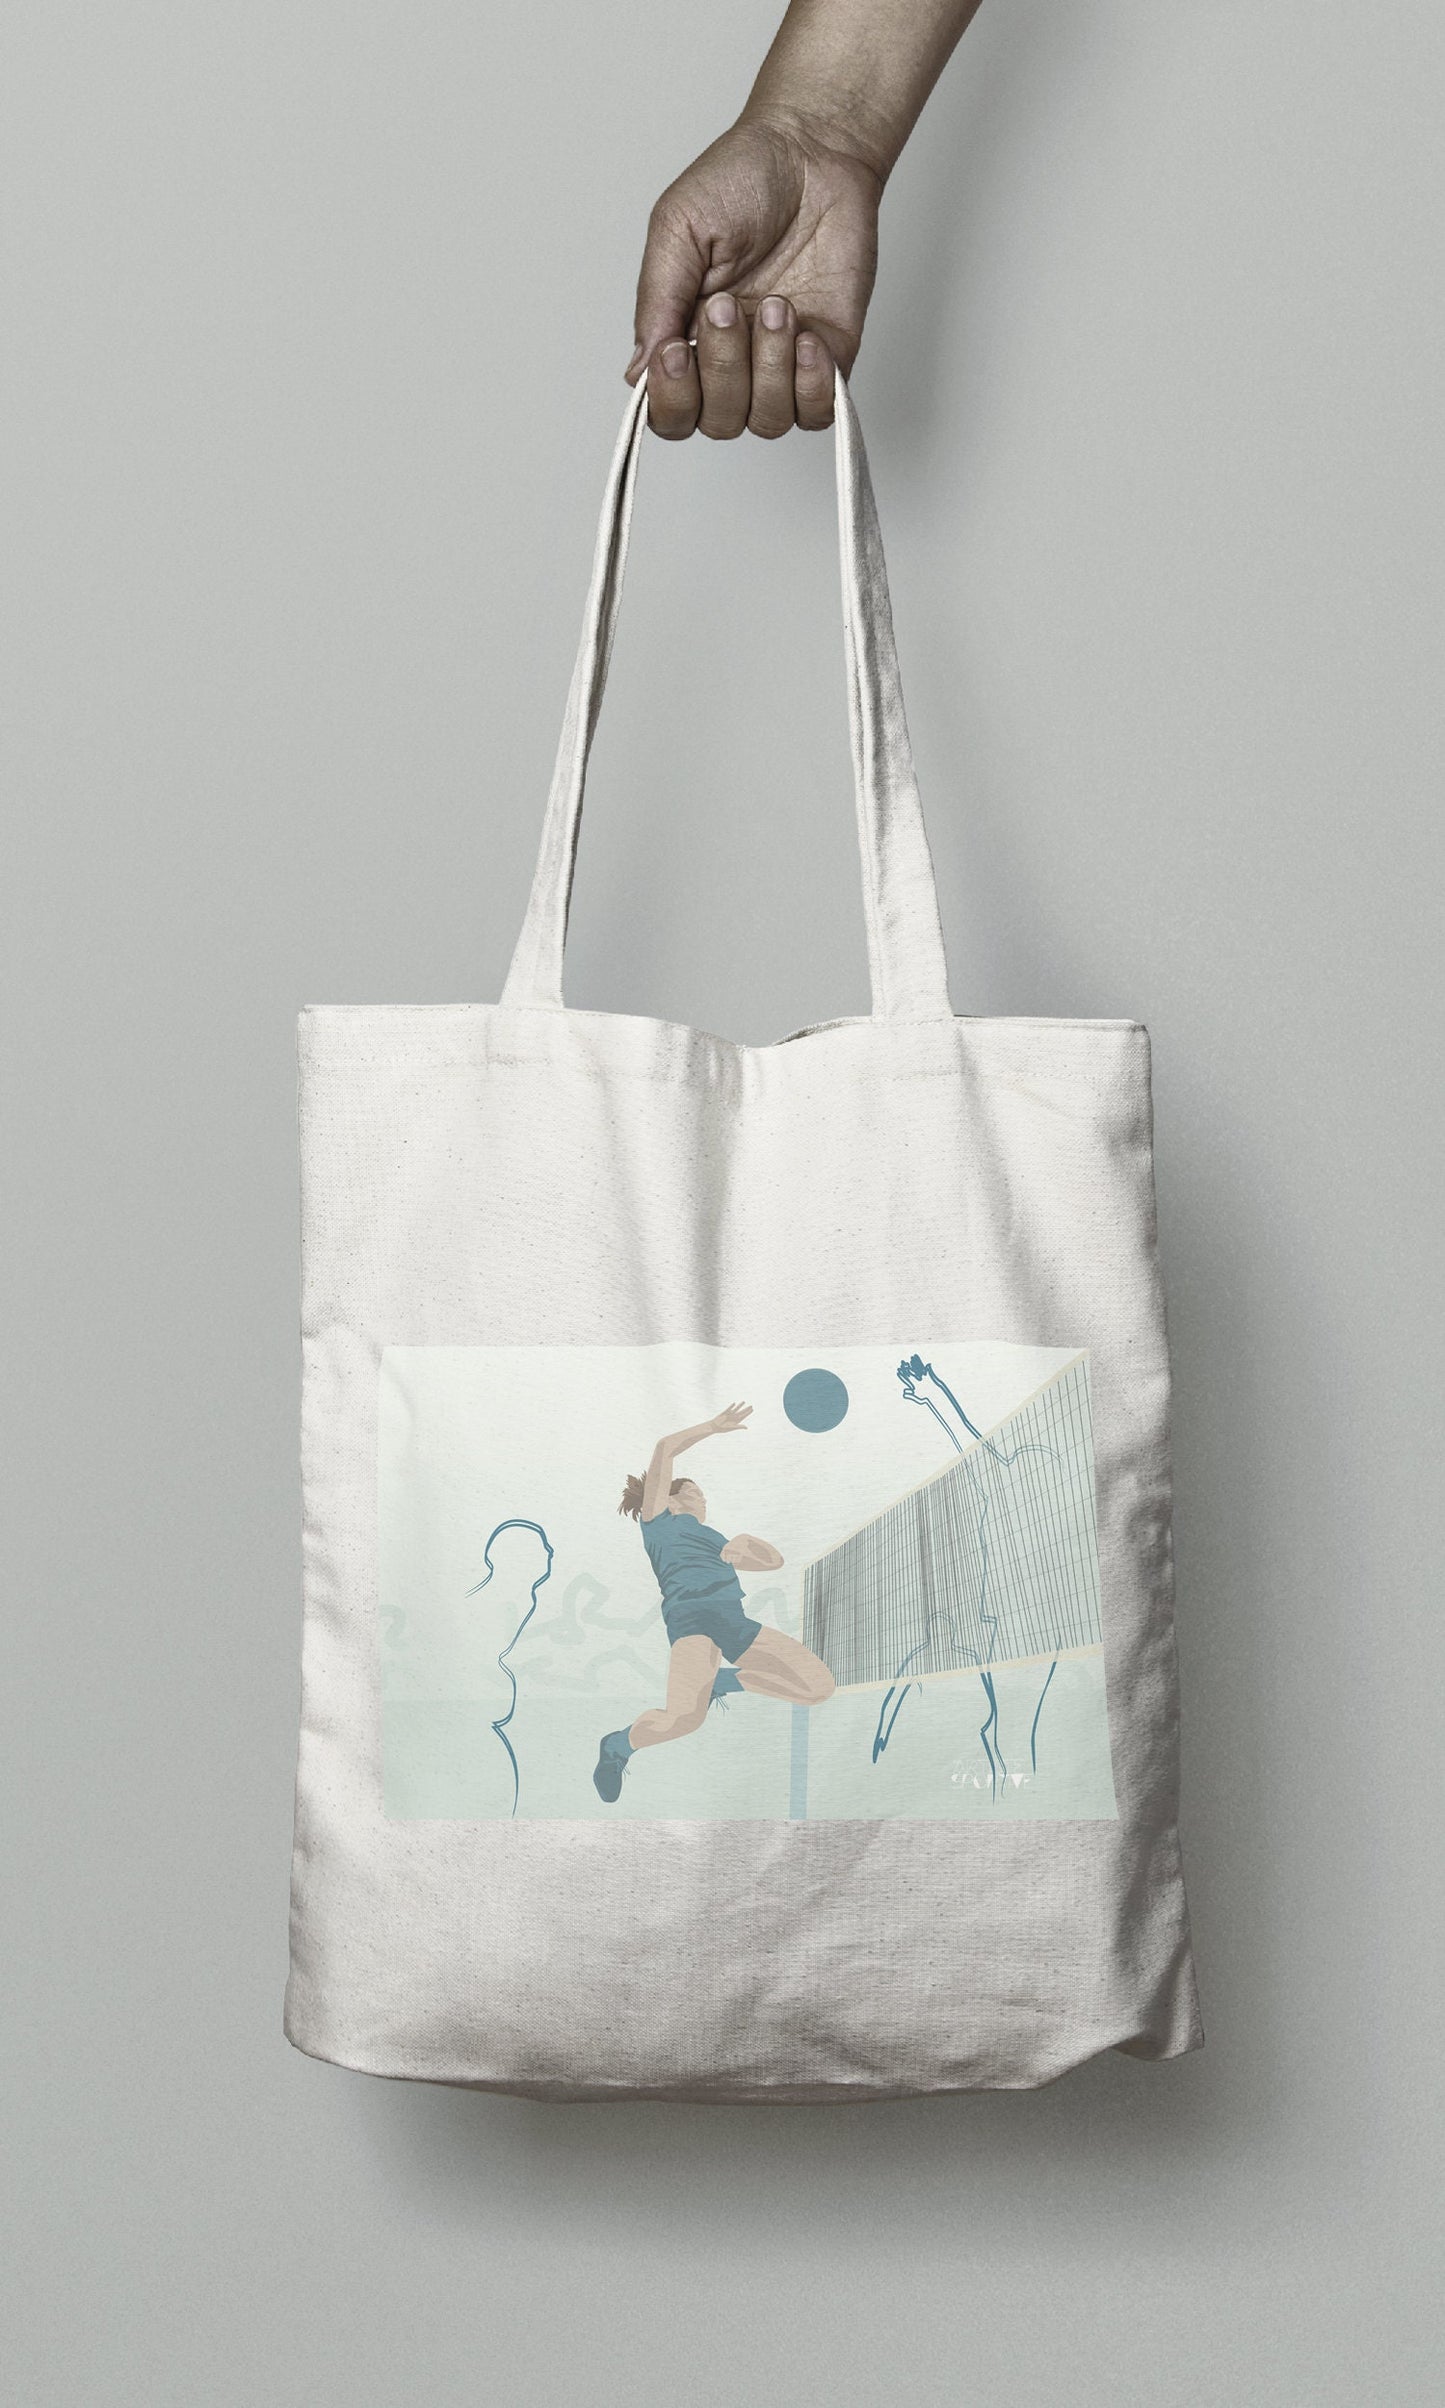 Tote bag ou sac "Volleyball féminin"